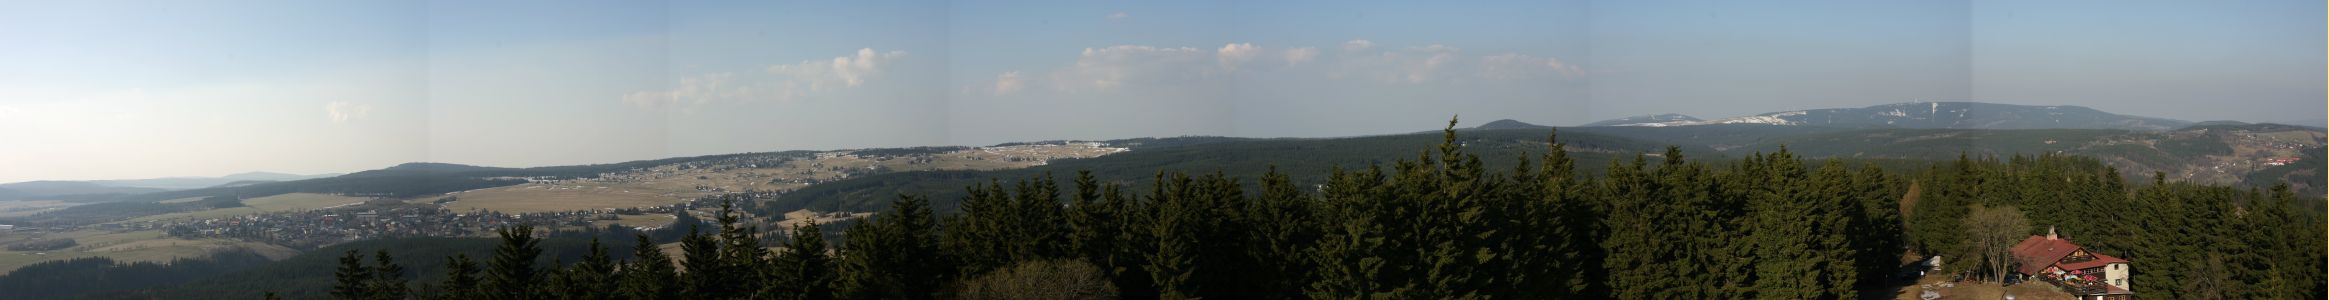 Panorama Plesivec lowres.jpg